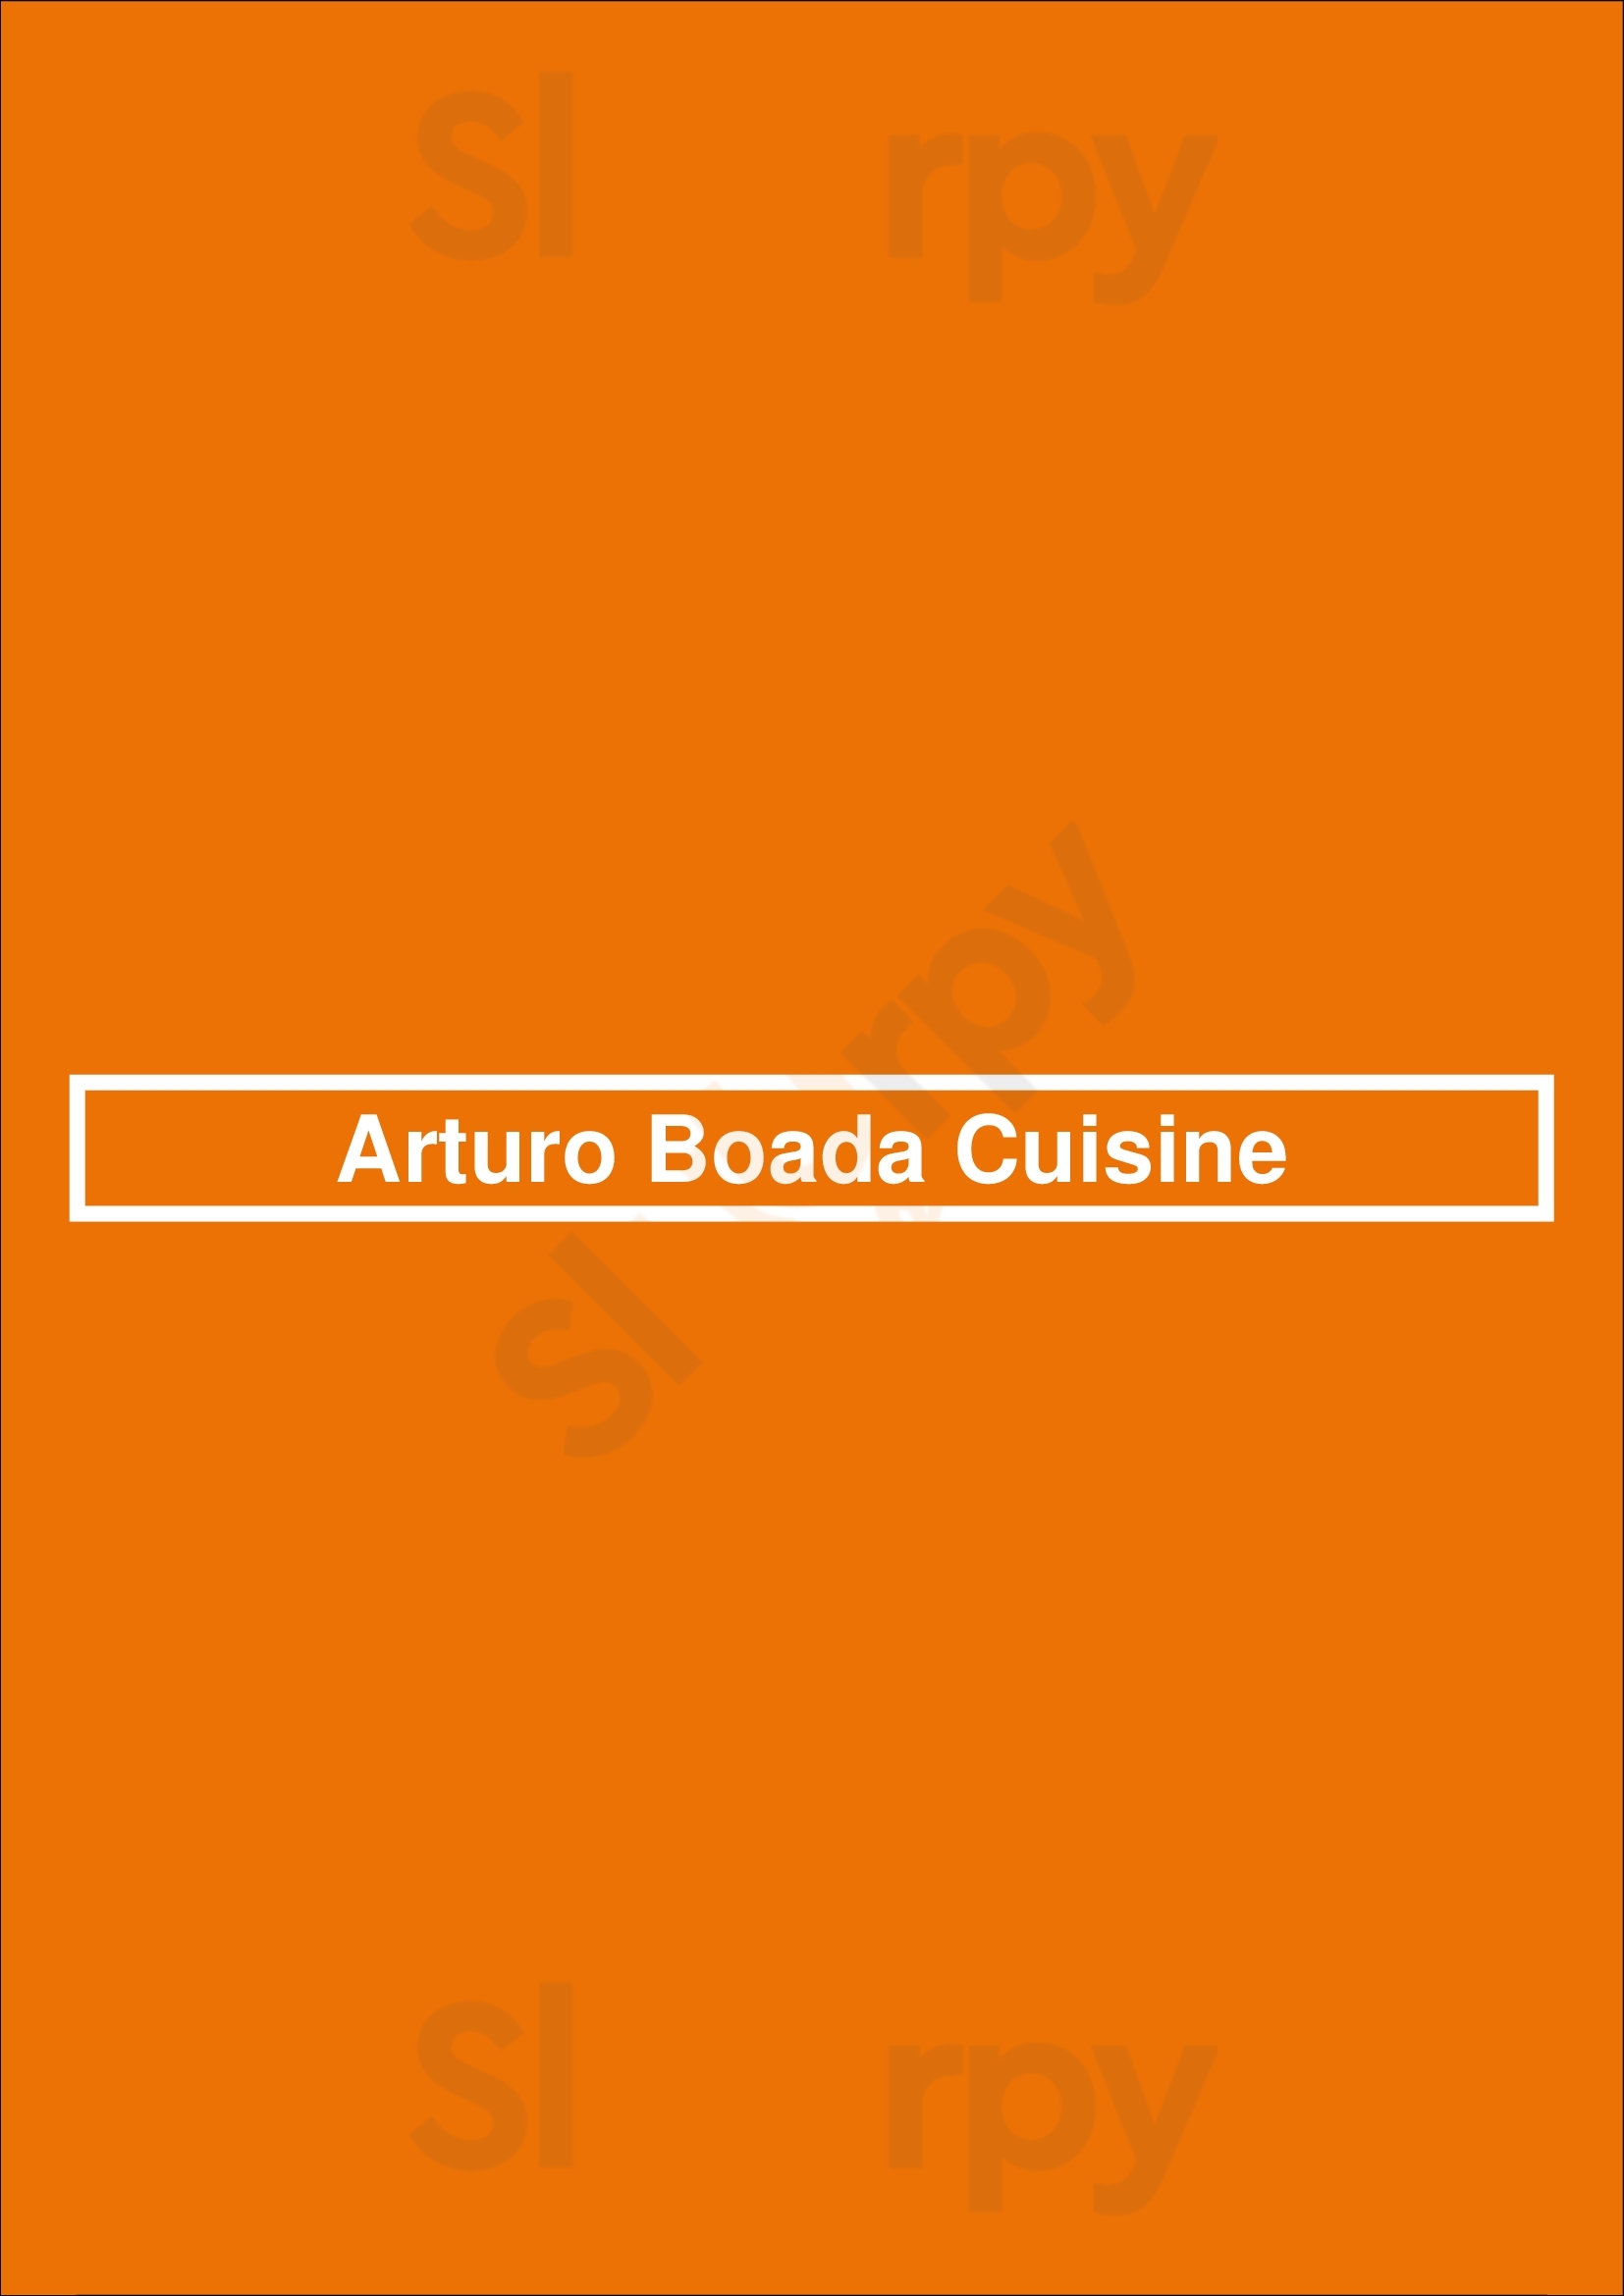 Arturo Boada Cuisine Houston Menu - 1